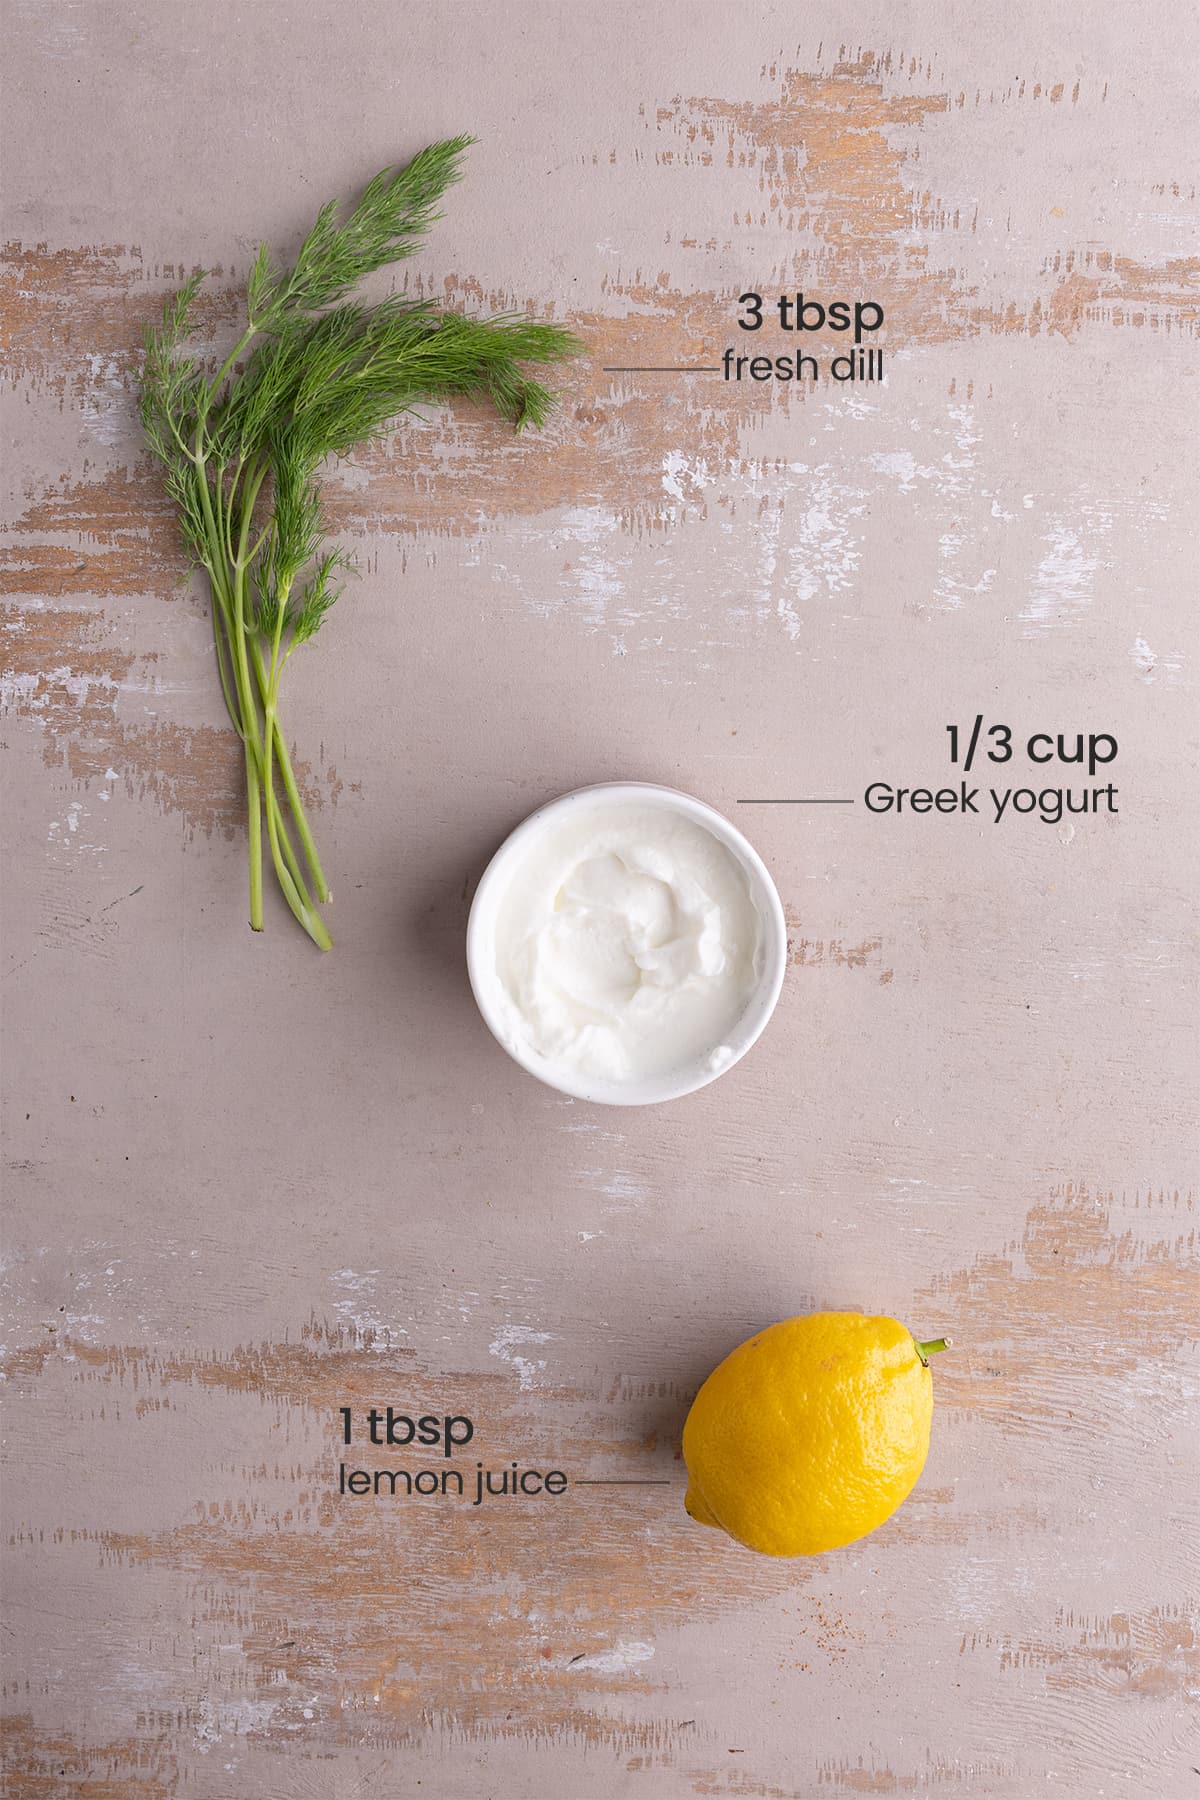 ingredients for dill yogurt sauce - dill, Greek yogurt, lemon juice